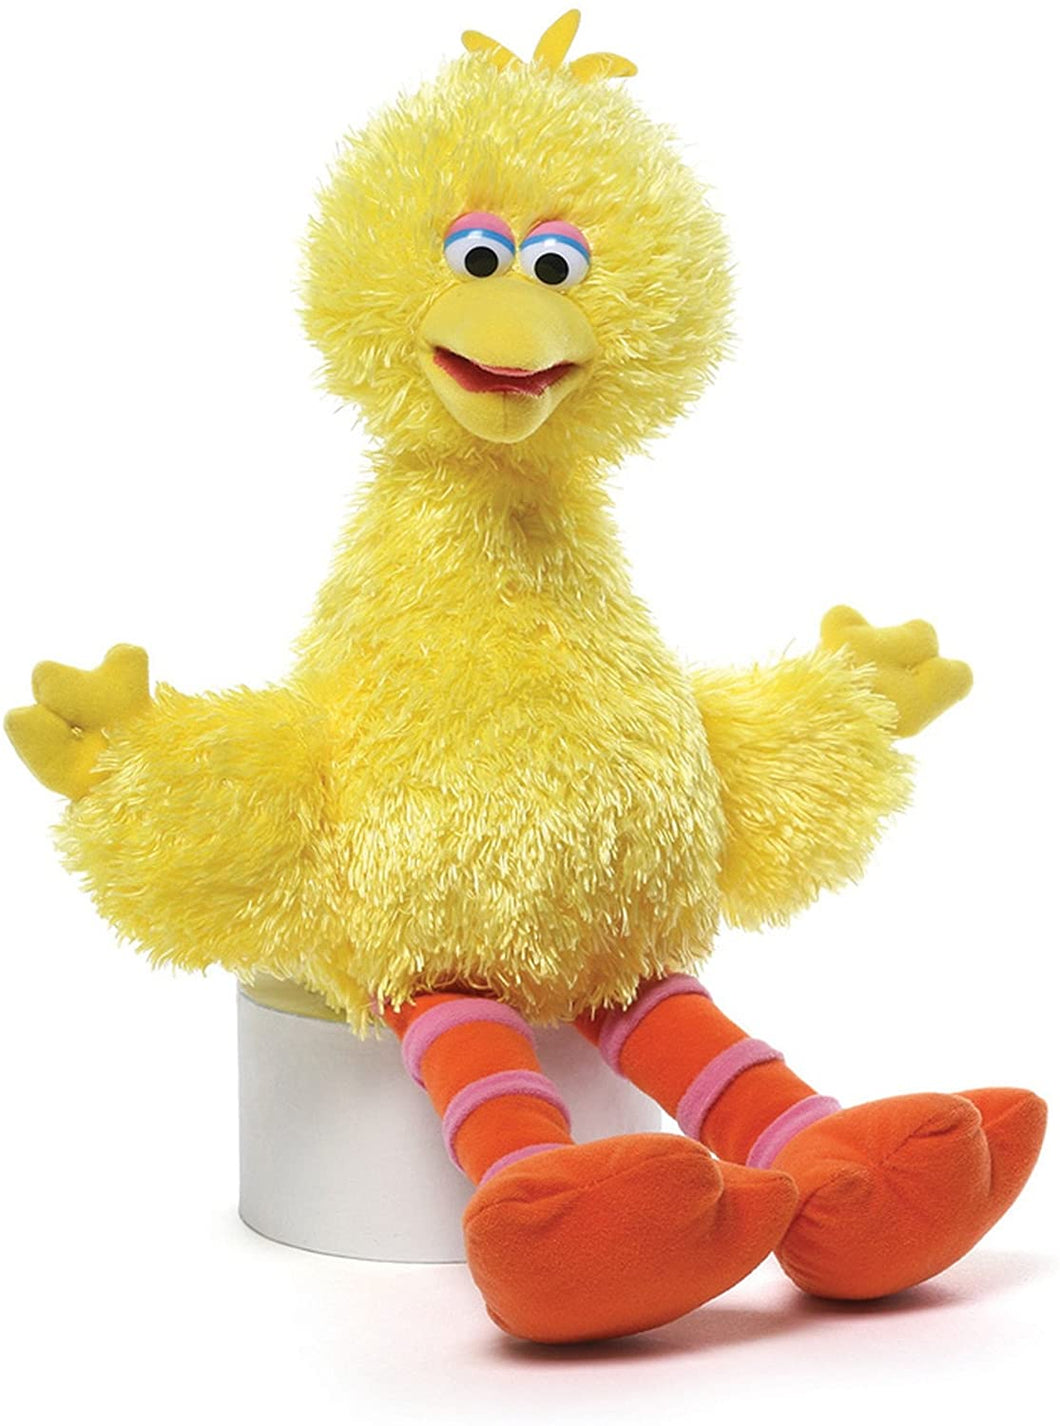 Gund Sesame Street Big Bird Stuffed Animal